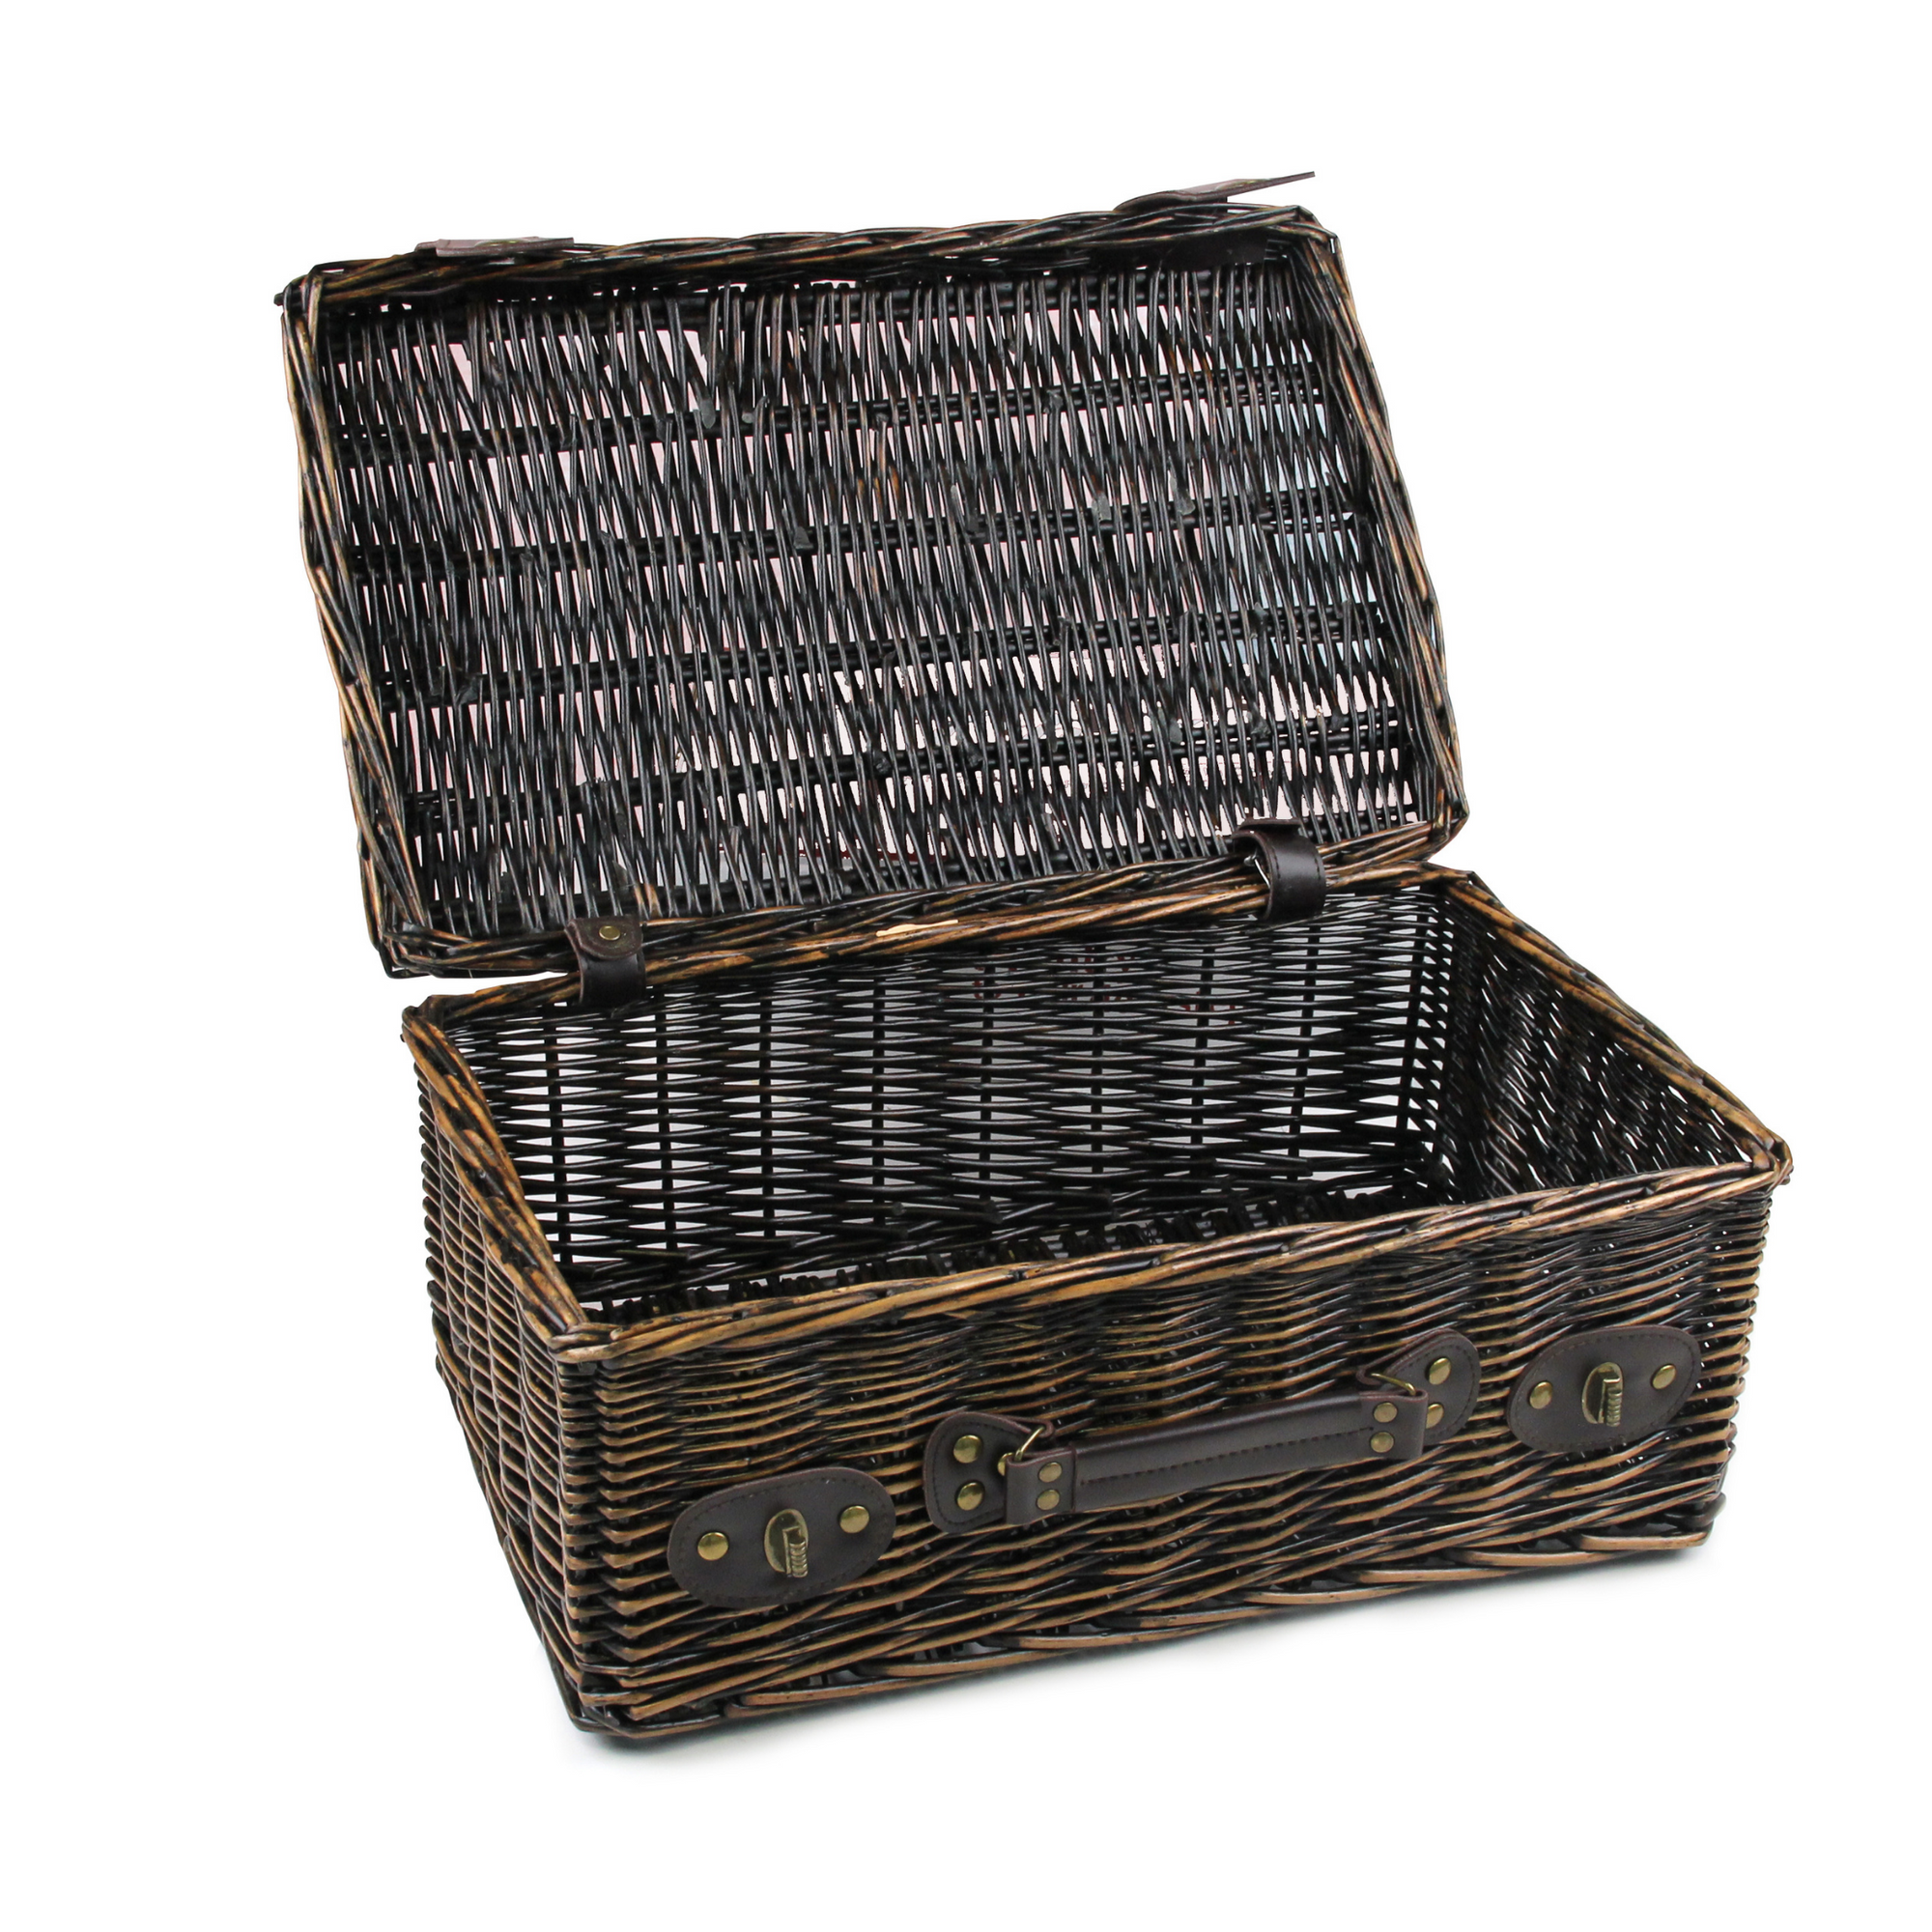 Bamboo Gifting Basket